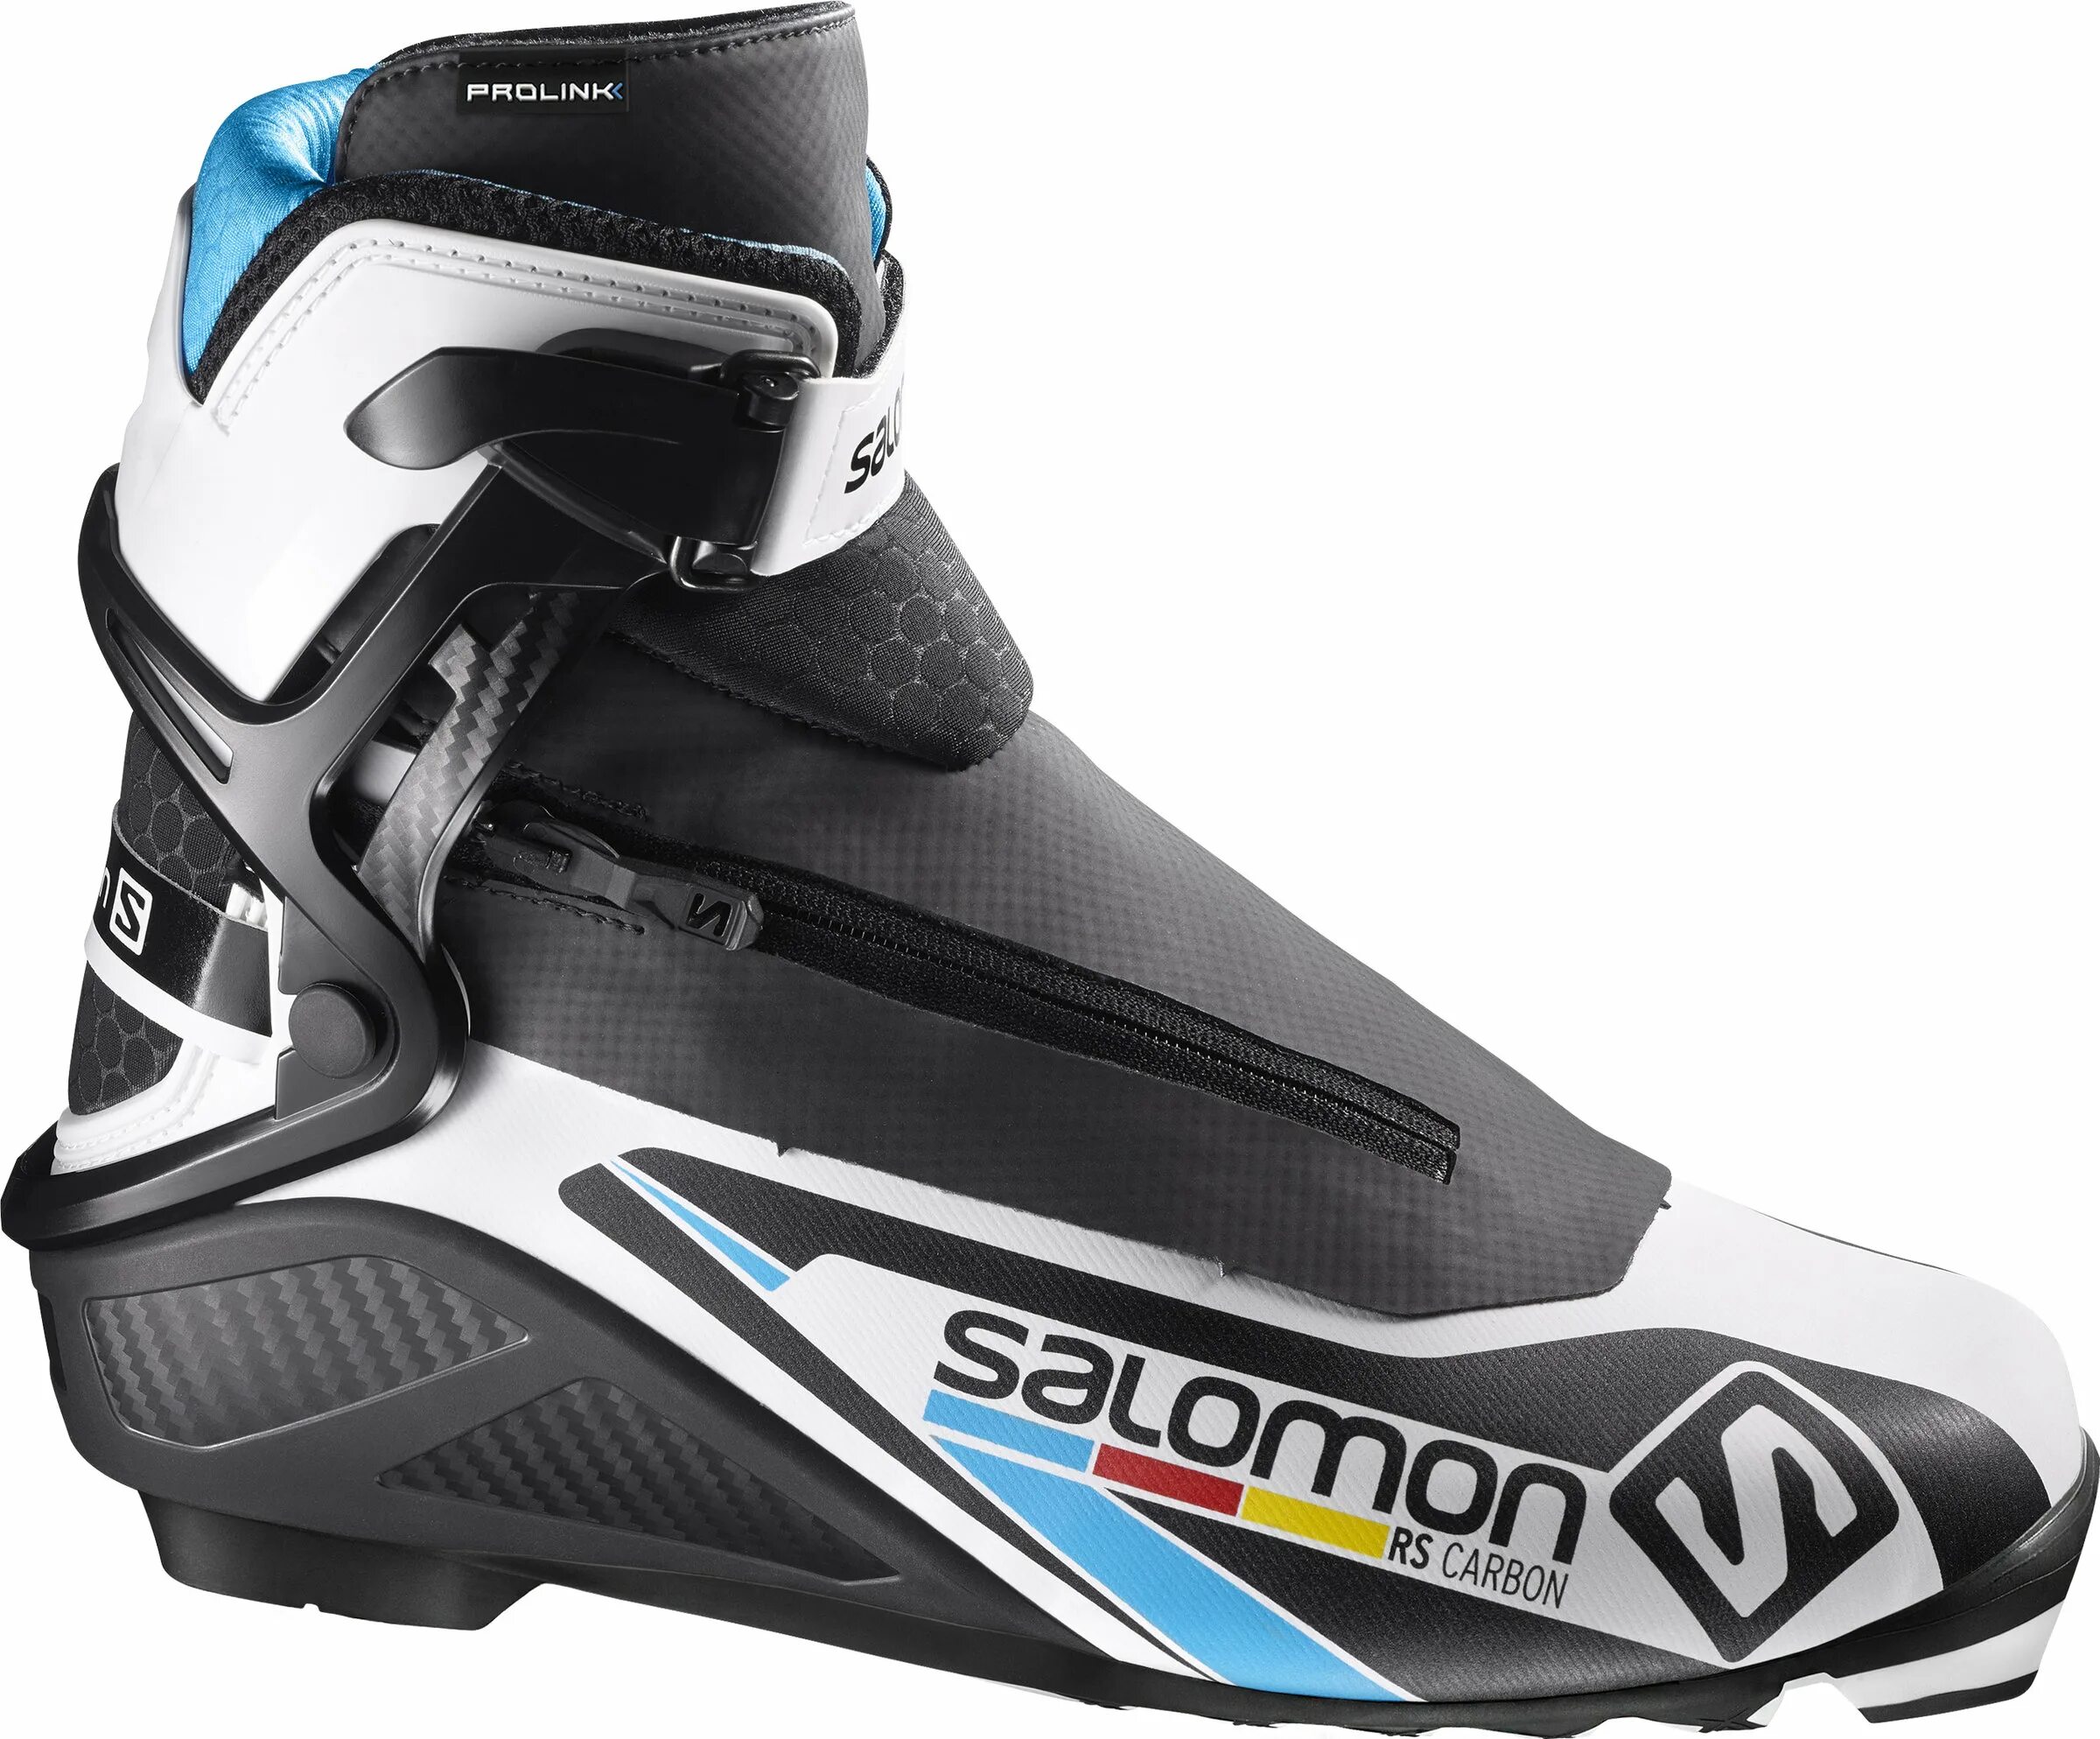 S race skate. Лыжные ботинки Salomon RS Carbon. Лыжные ботинки Salomon s-Lab Carbon. Лыжные ботинки Salomon Prolink Skate. Лыжные ботинки Salomon Carbon Skate.